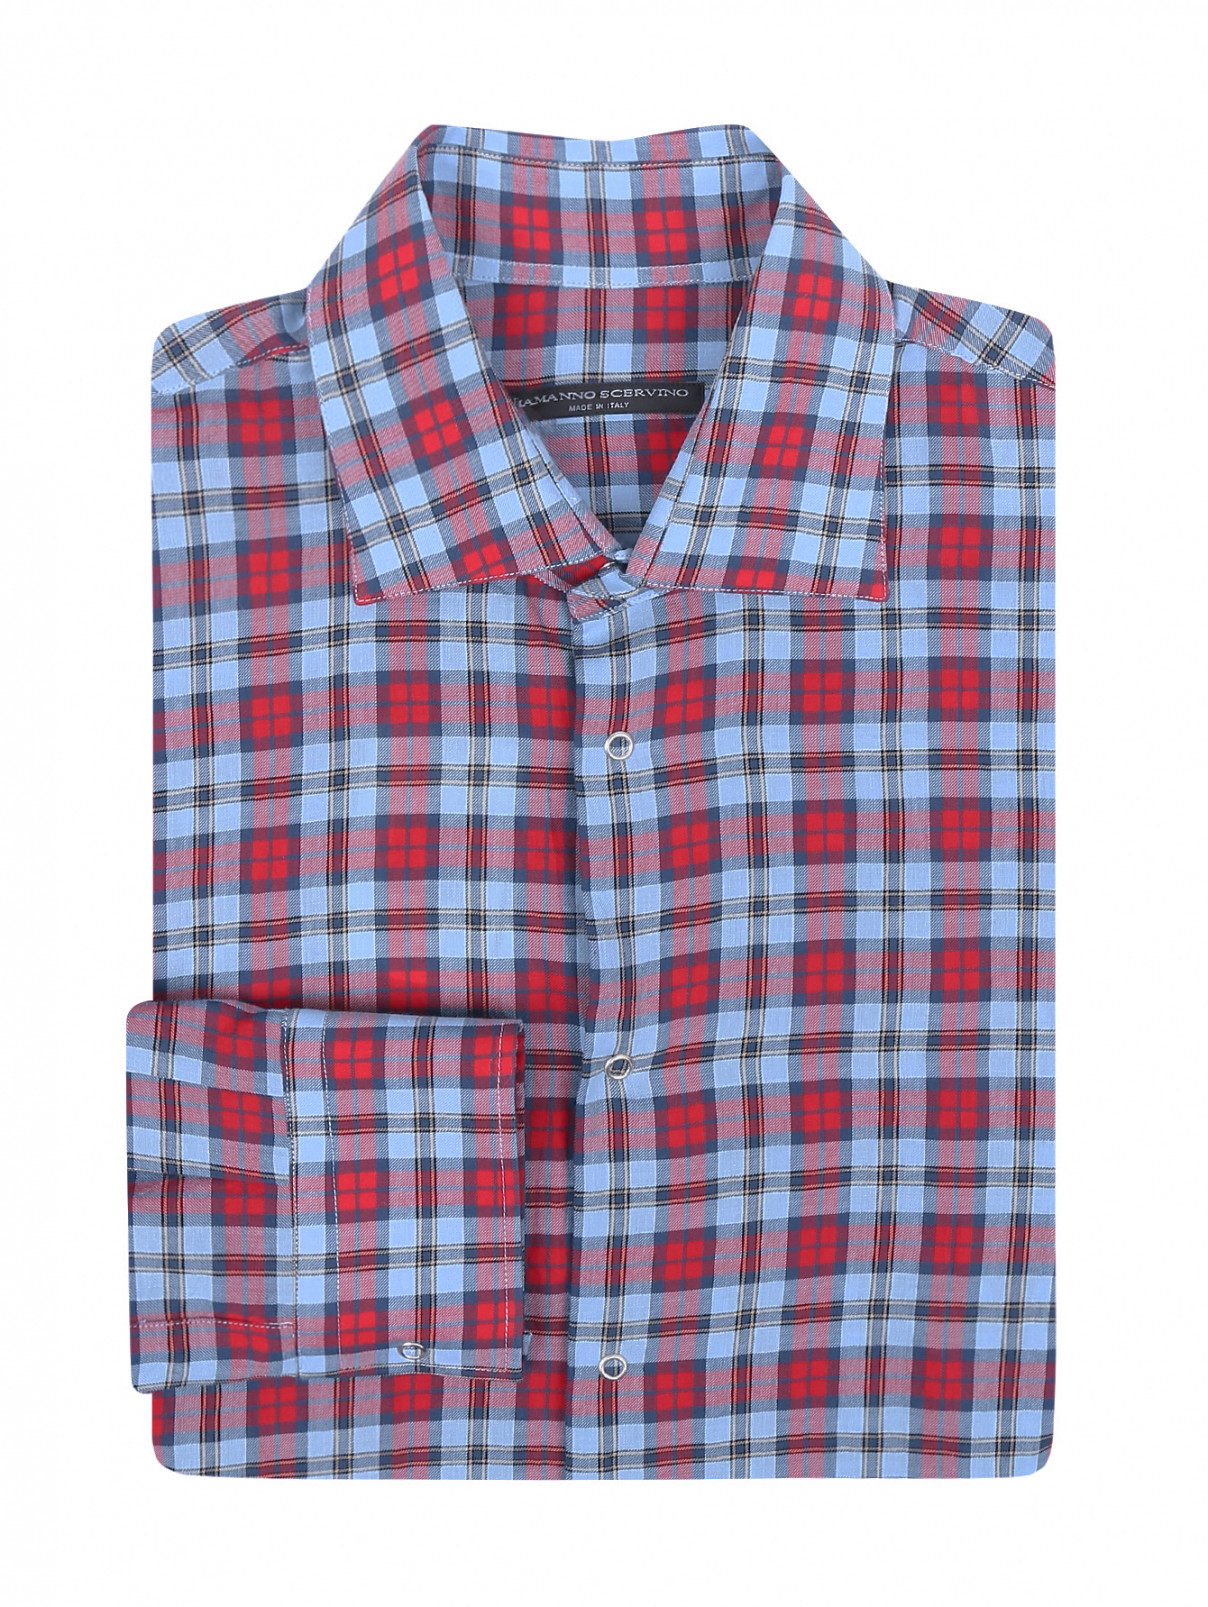 Рубашка из хлопка с узором "клетка" Ermanno Scervino  –  Общий вид  – Цвет:  Узор